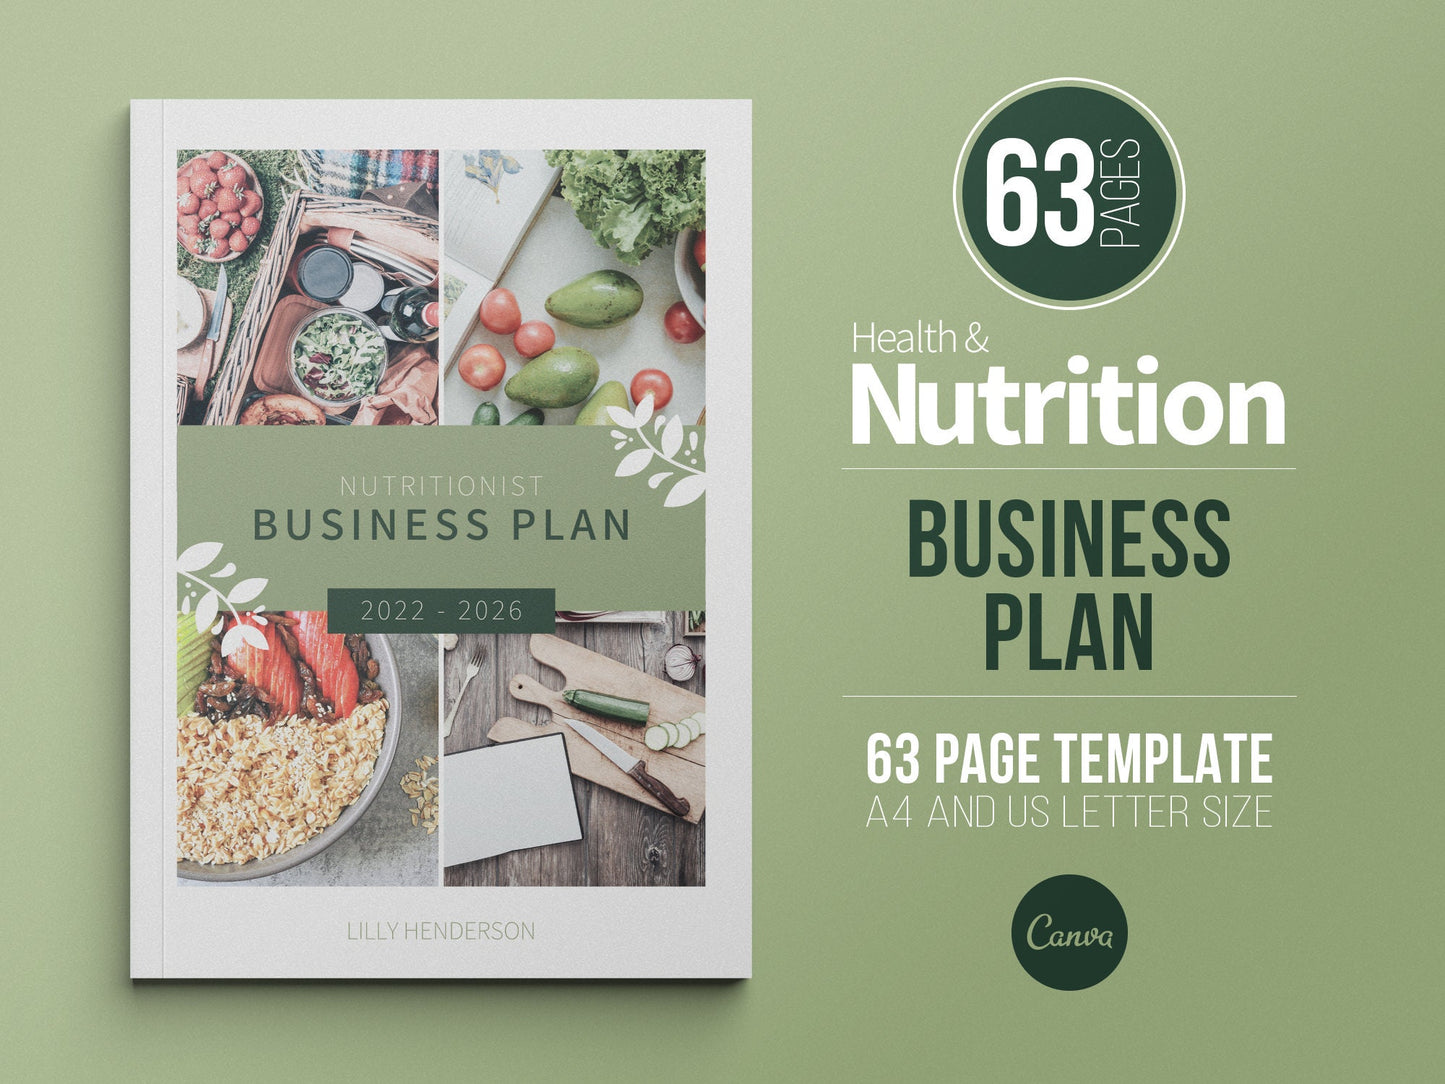 Nutritionist Business Plan Template | Nutrition Business Strategy | Dietitian | Business Proposal | Canva Template | Digital Business Plan